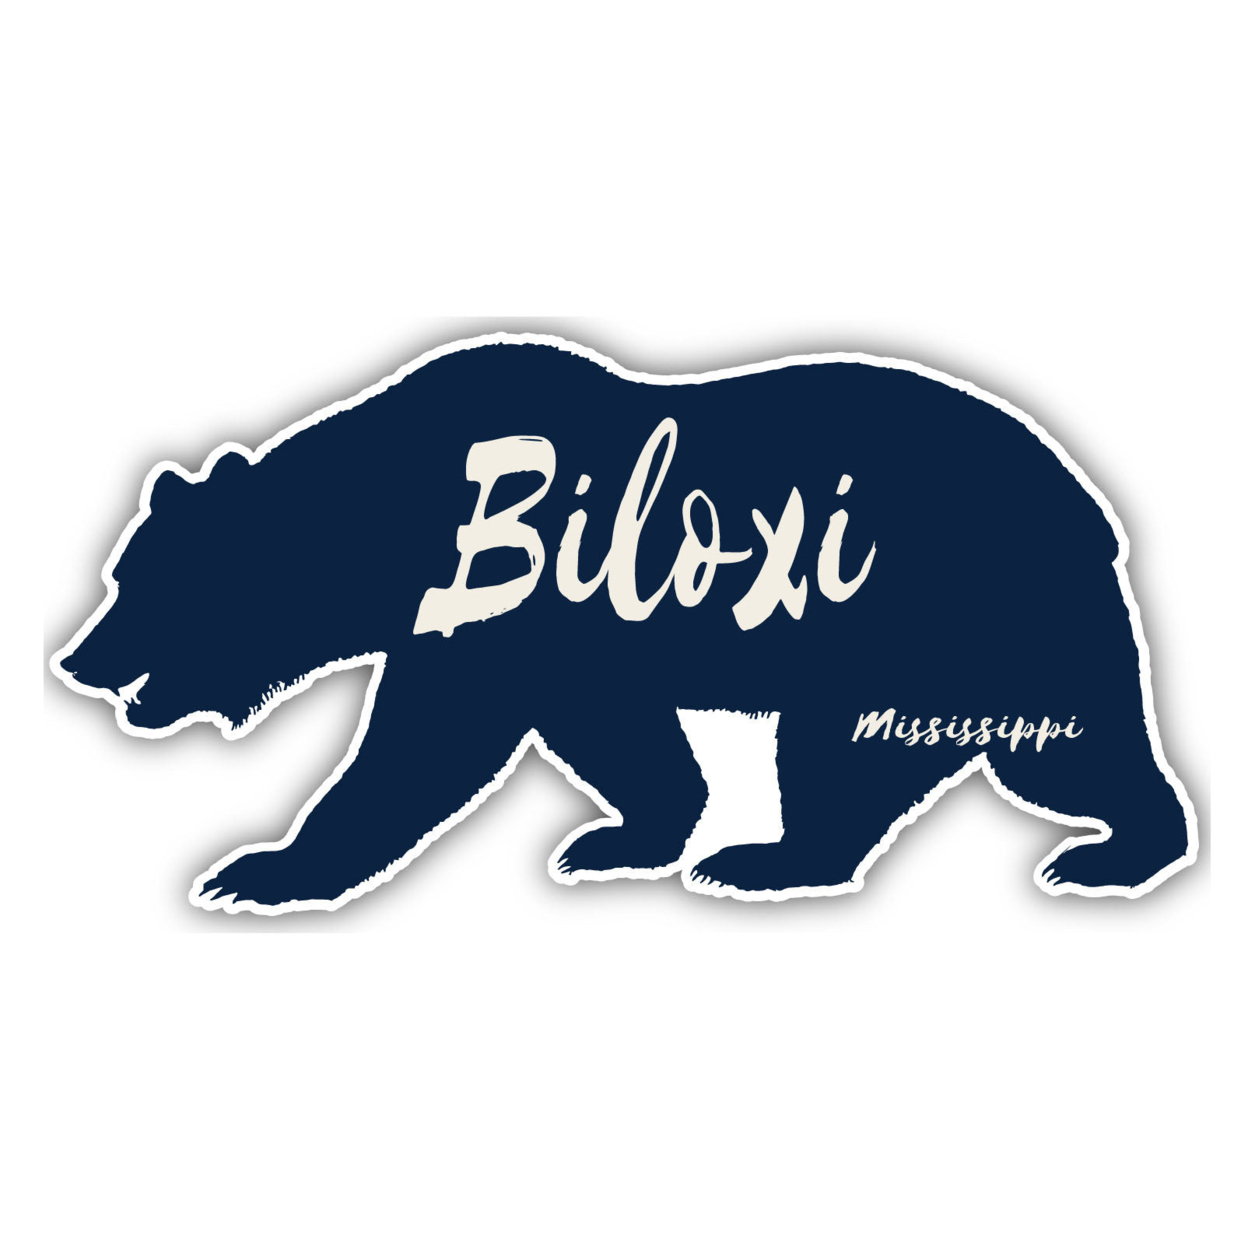 Biloxi Mississippi Souvenir Decorative Stickers (Choose Theme And Size) - Single Unit, 10-Inch, Camp Life